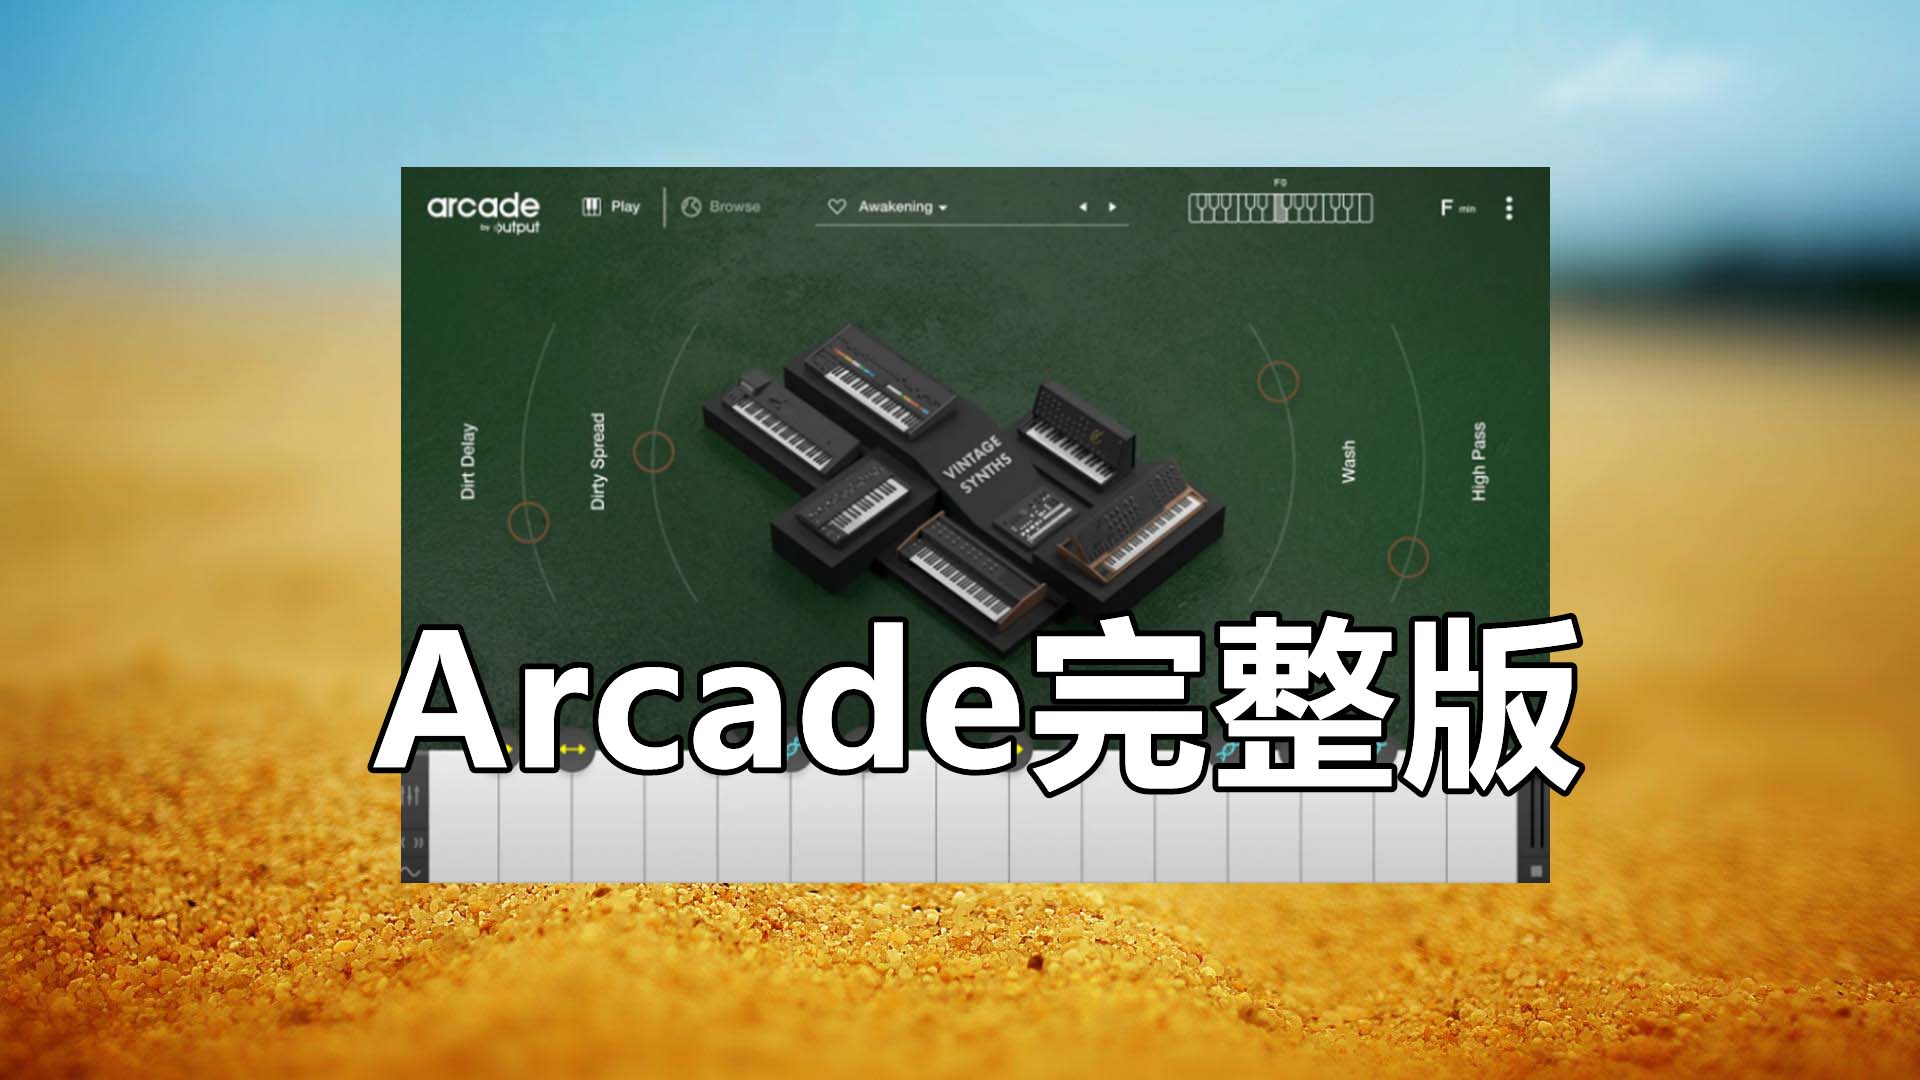 Arcade插件完整版【内置采样音色音源超多超全】Output Arcade插件完整音色库版【Win\Mac】